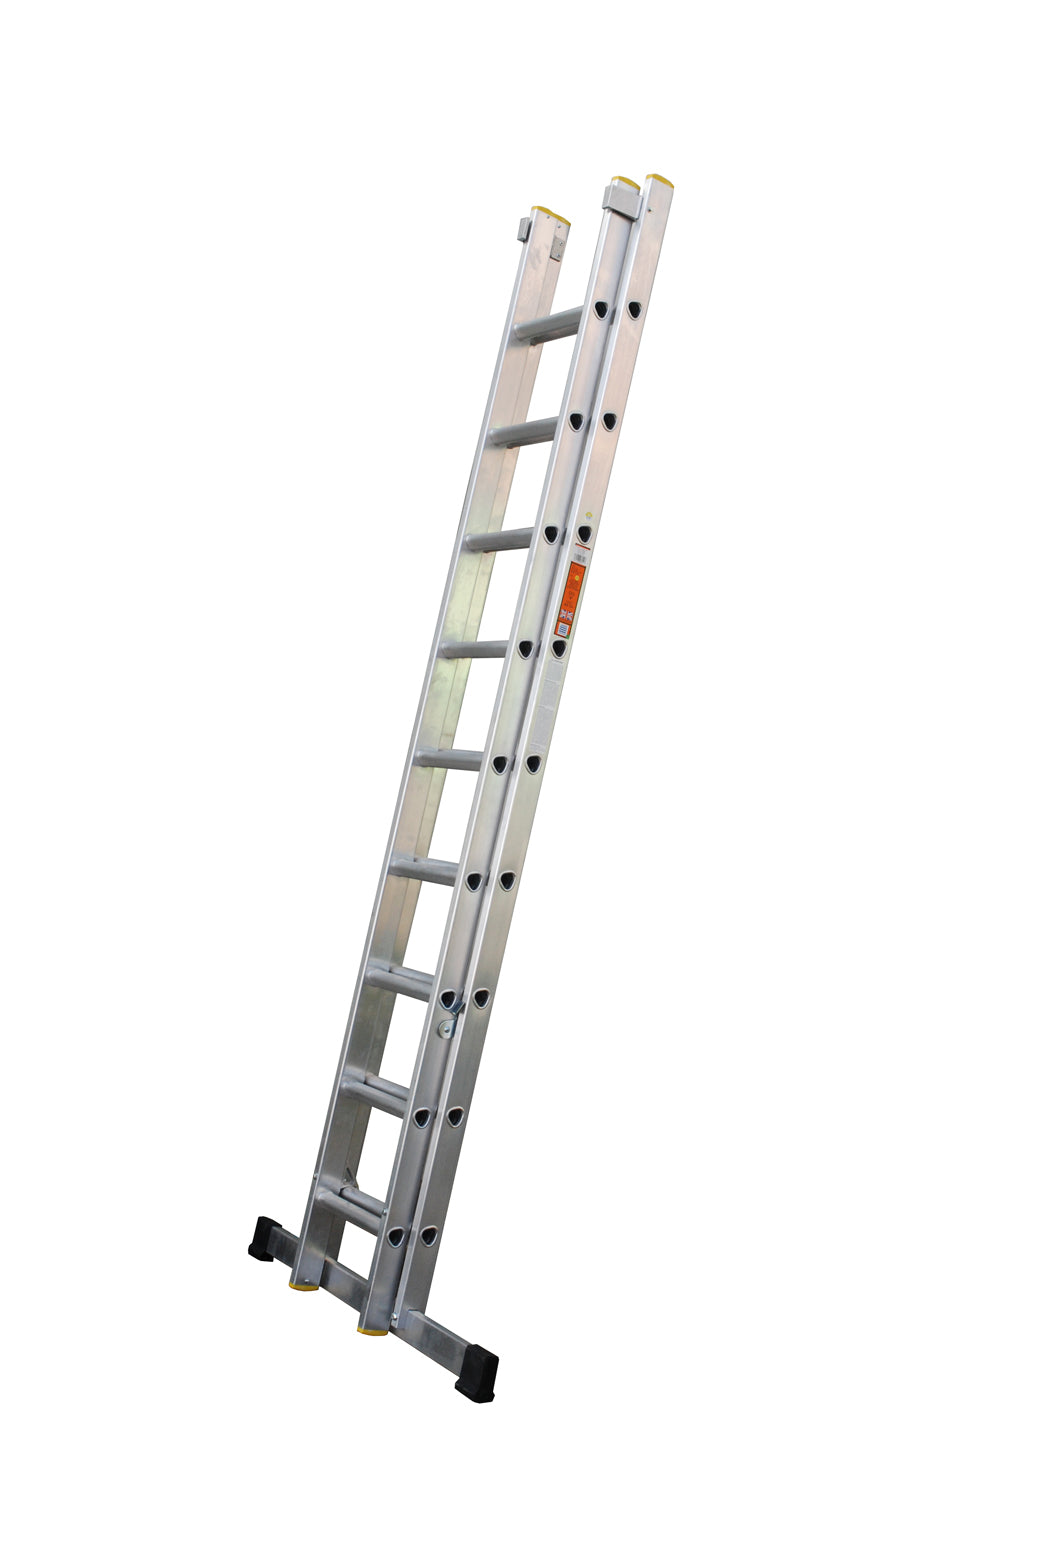 EN131 Professional Double Section Extension Ladder